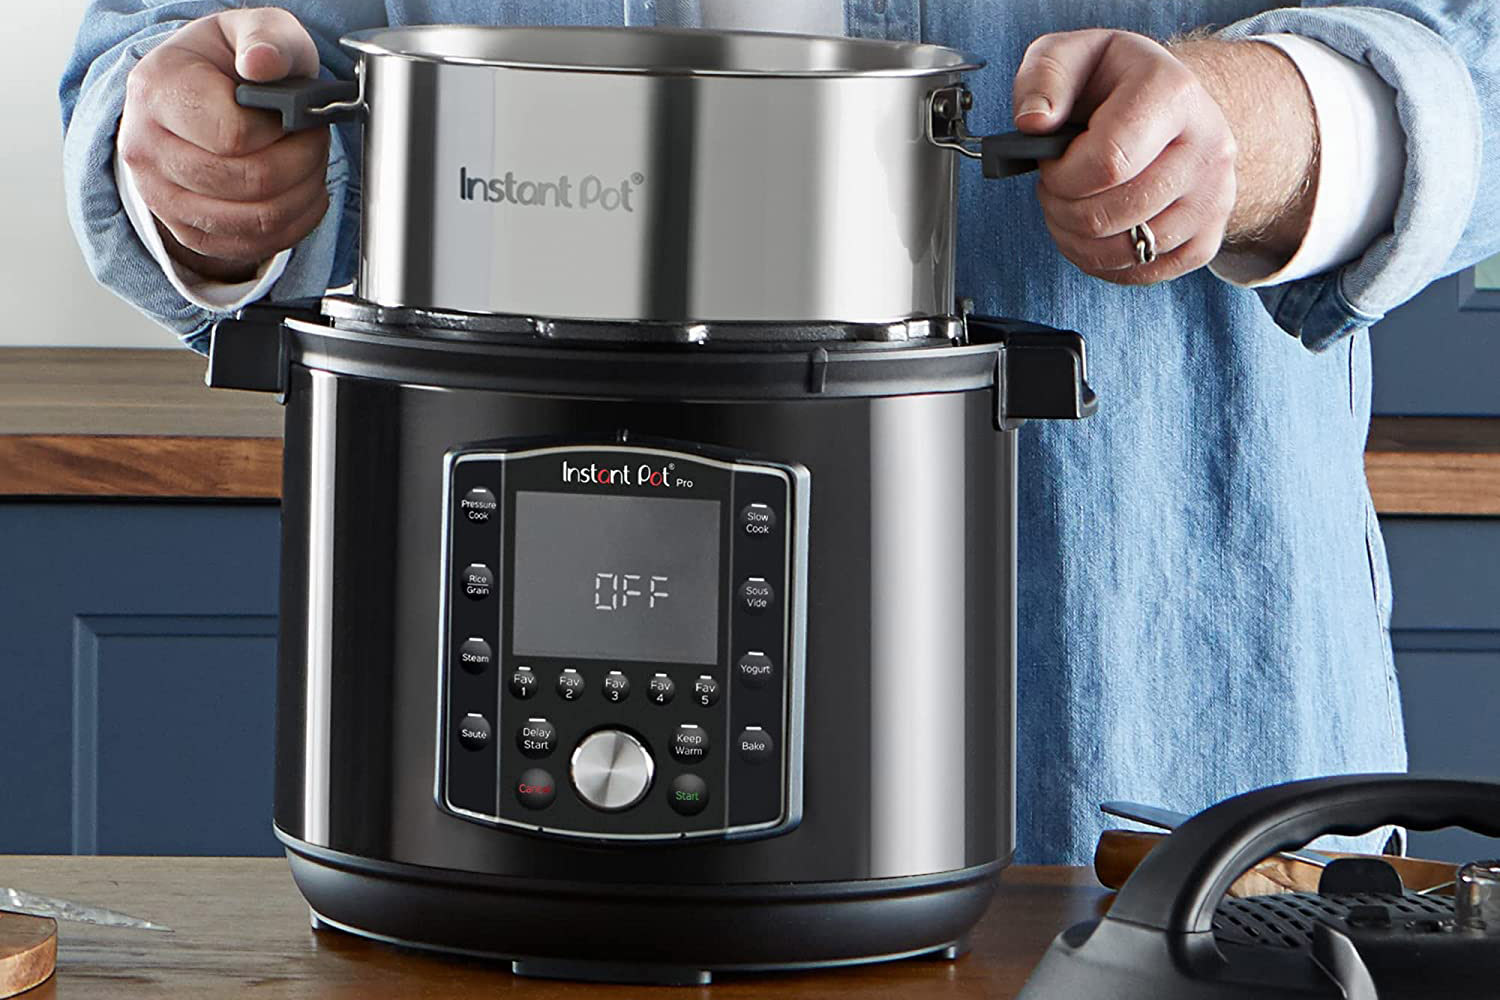 Best Prime Day Instant Pot deals still available: Save $30 on an Instant Pot  or Instant Pot Lux slow cooker - CNET